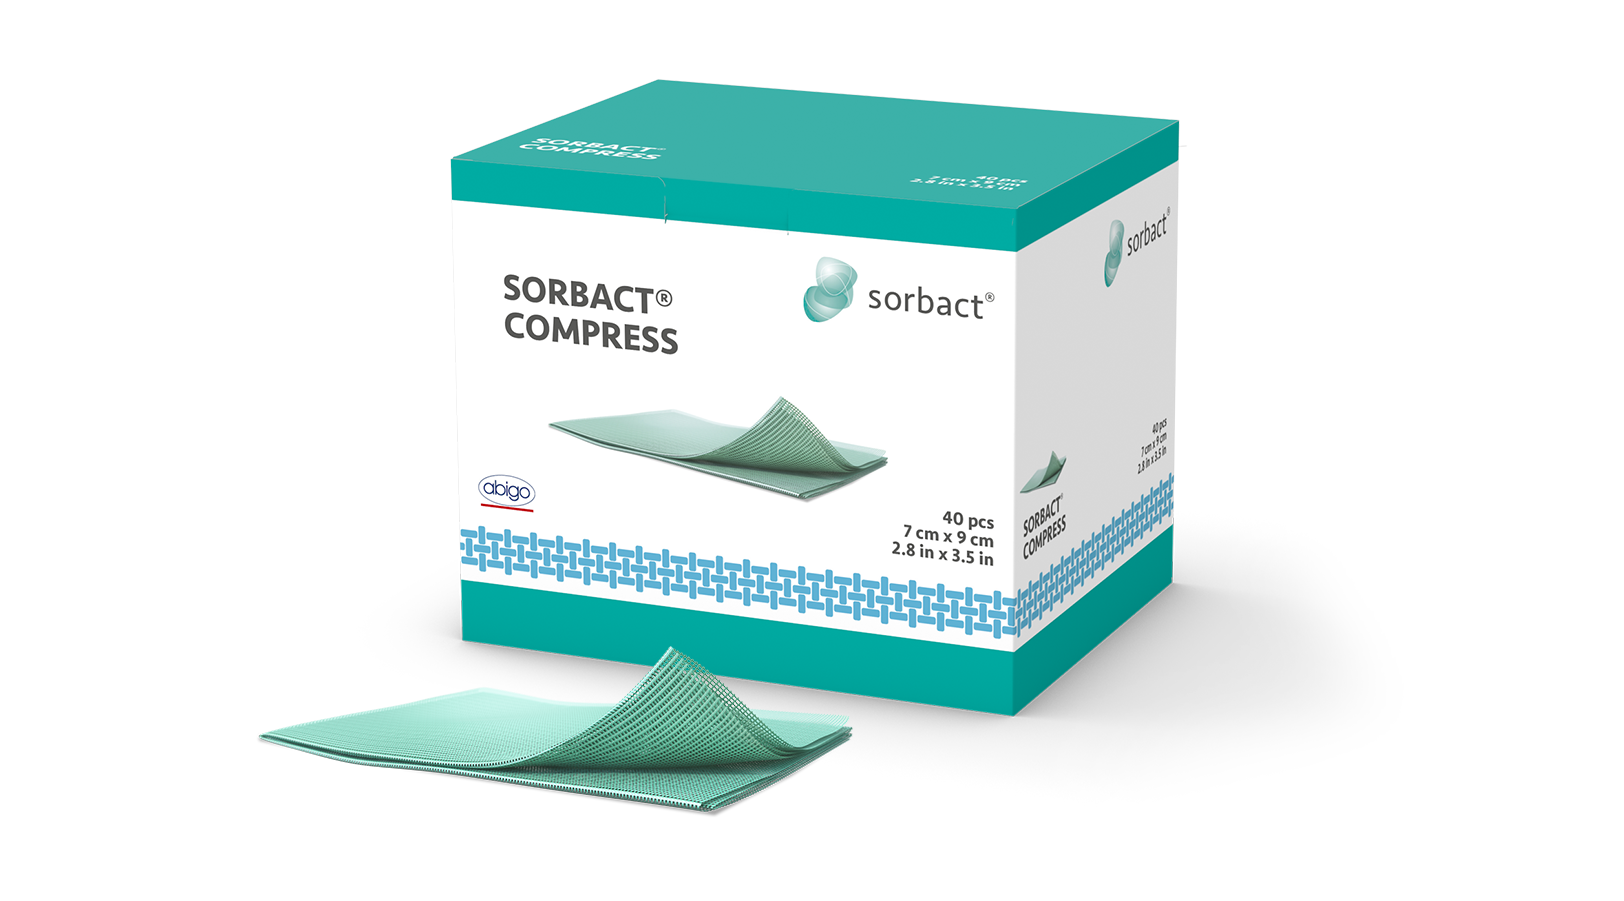 sorbact-compress-1624x901-2020